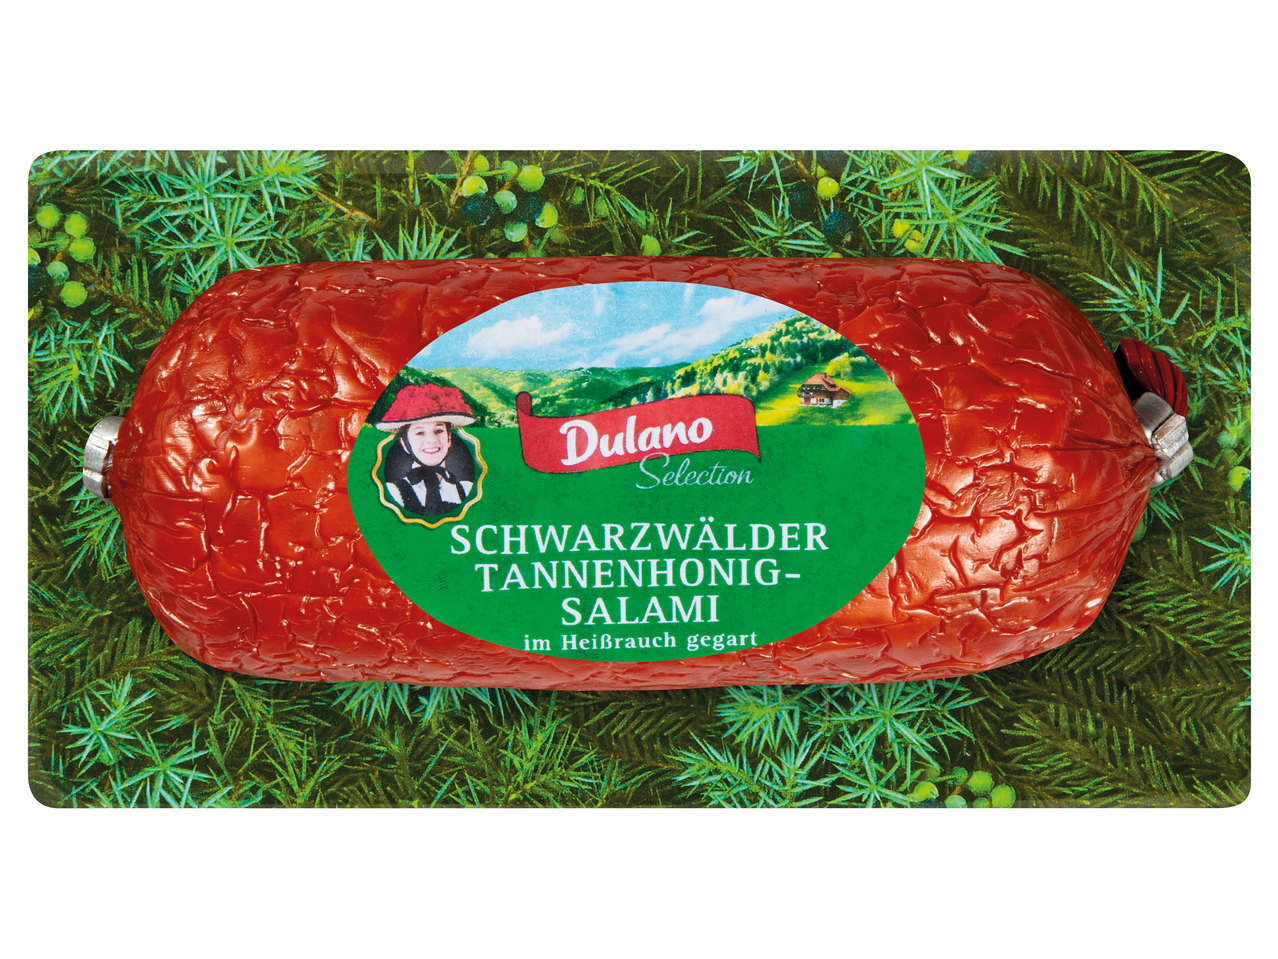 DULANO SELECTION Schwarzwälder Tannenhonigsalami